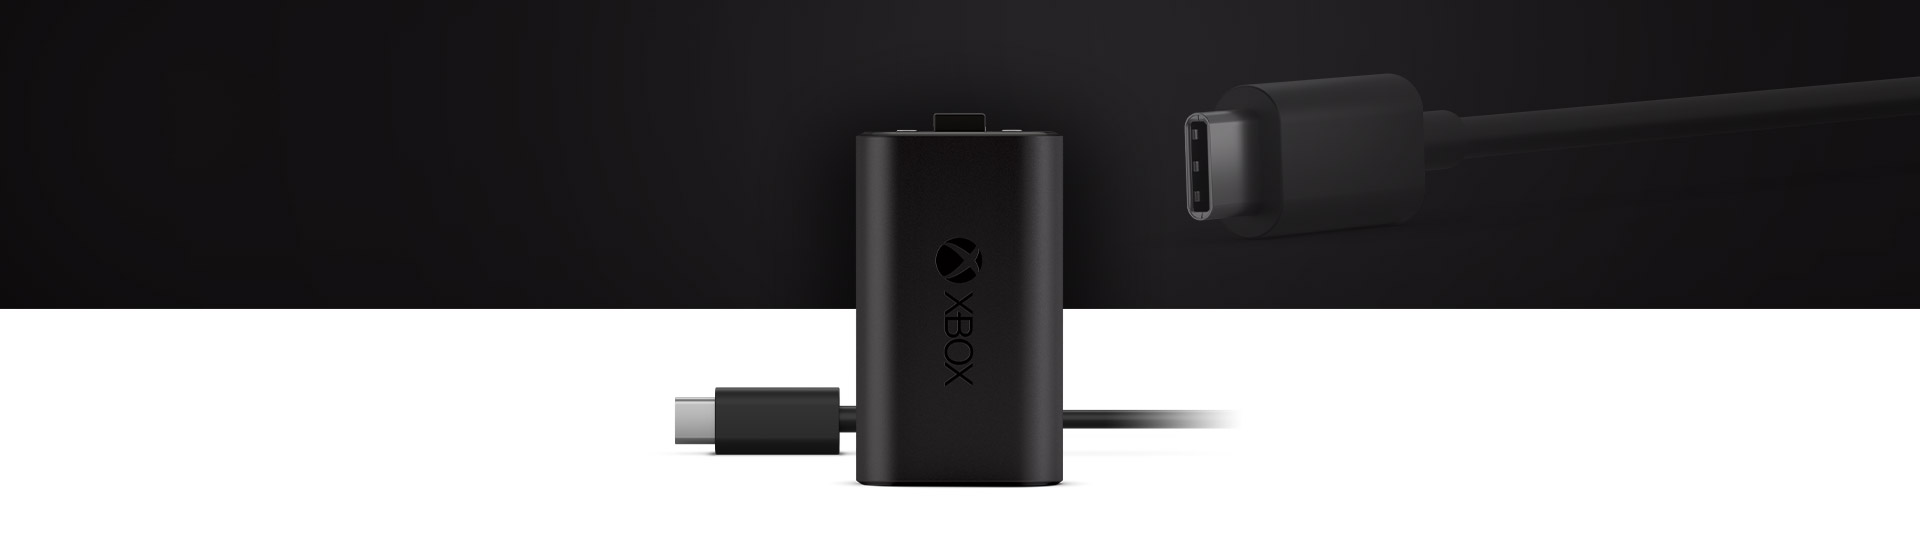 Batería recargable Xbox + cable USB-C® con un primer plano del cable USB-C®